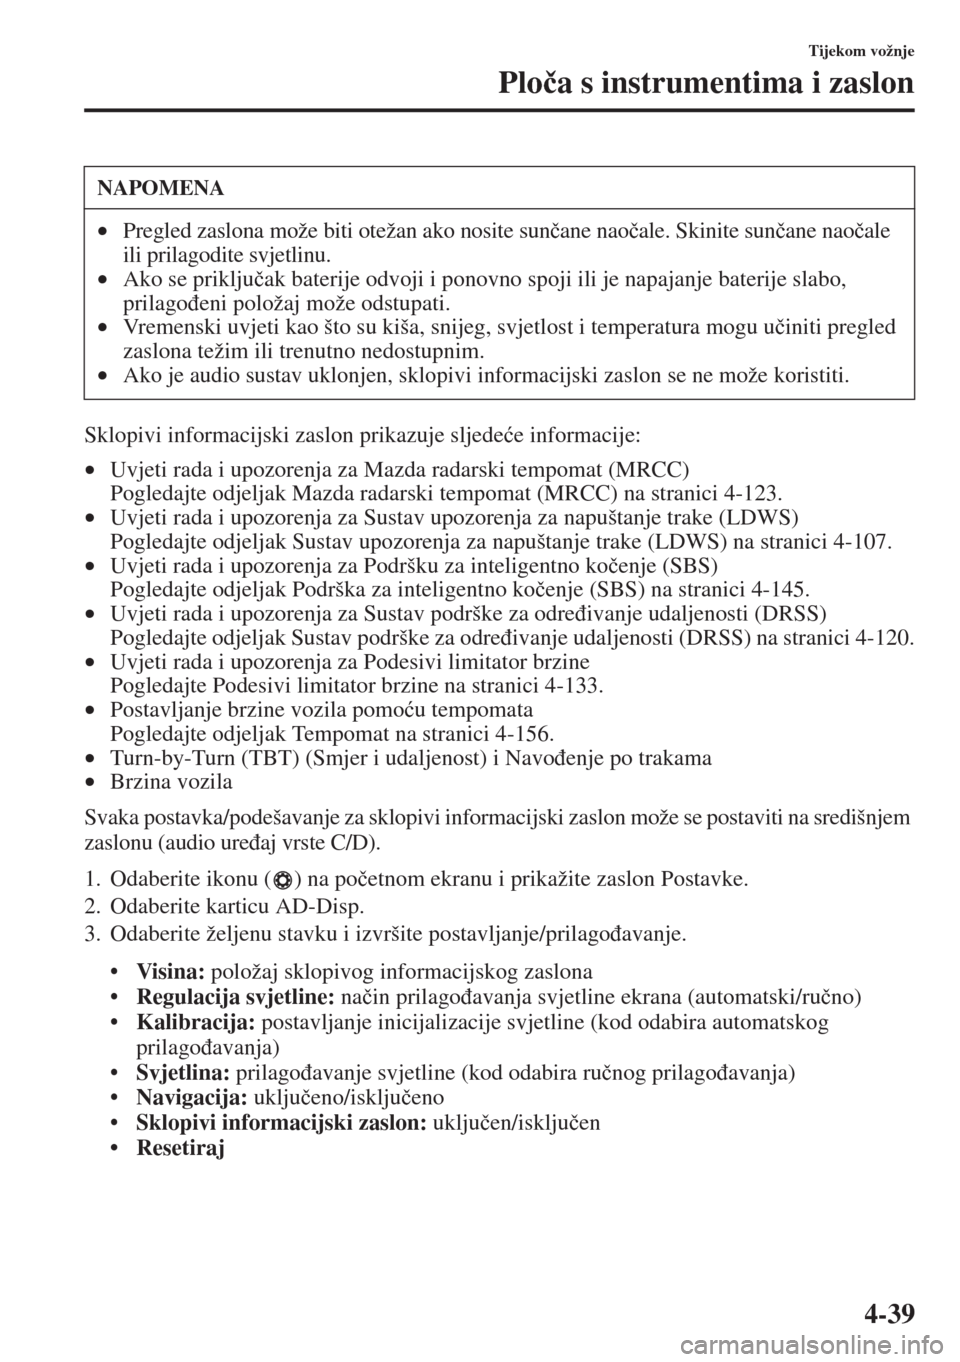 MAZDA MODEL 3 HATCHBACK 2015  Upute za uporabu (in Crotian) 4-39
Tijekom vožnje
Plo�þa s instrumentima i zaslon
Sklopivi informacijski zaslon prikazuje sljede�üe informacije:
•Uvjeti rada i upozorenja za Mazda radarski tempomat (MRCC)
Pogledajte odjeljak 